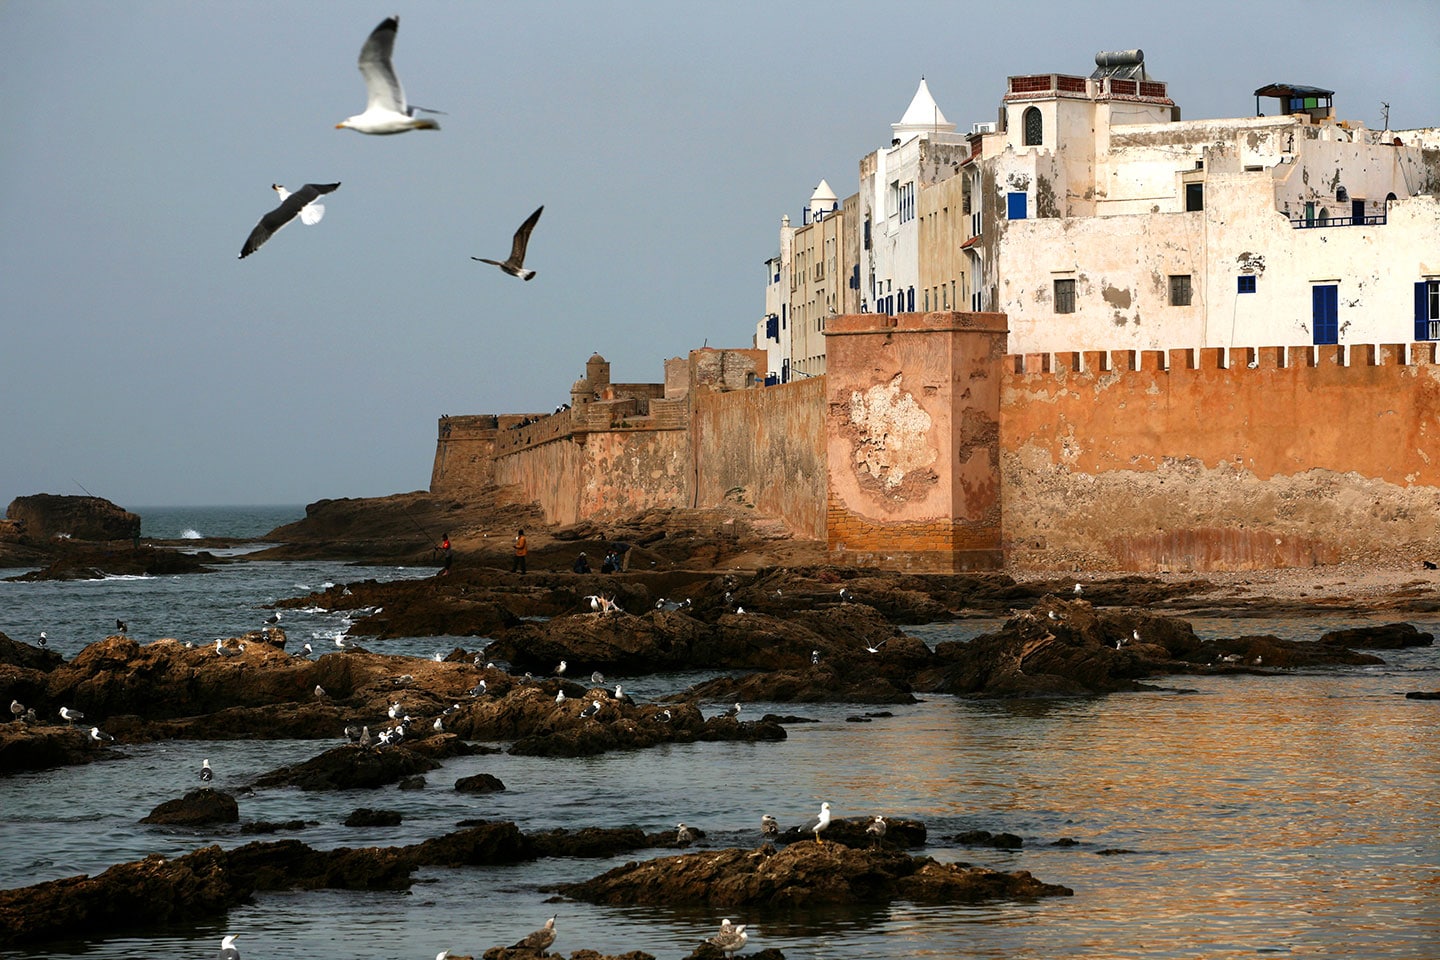 Coastal town of Essaouira, Morocco